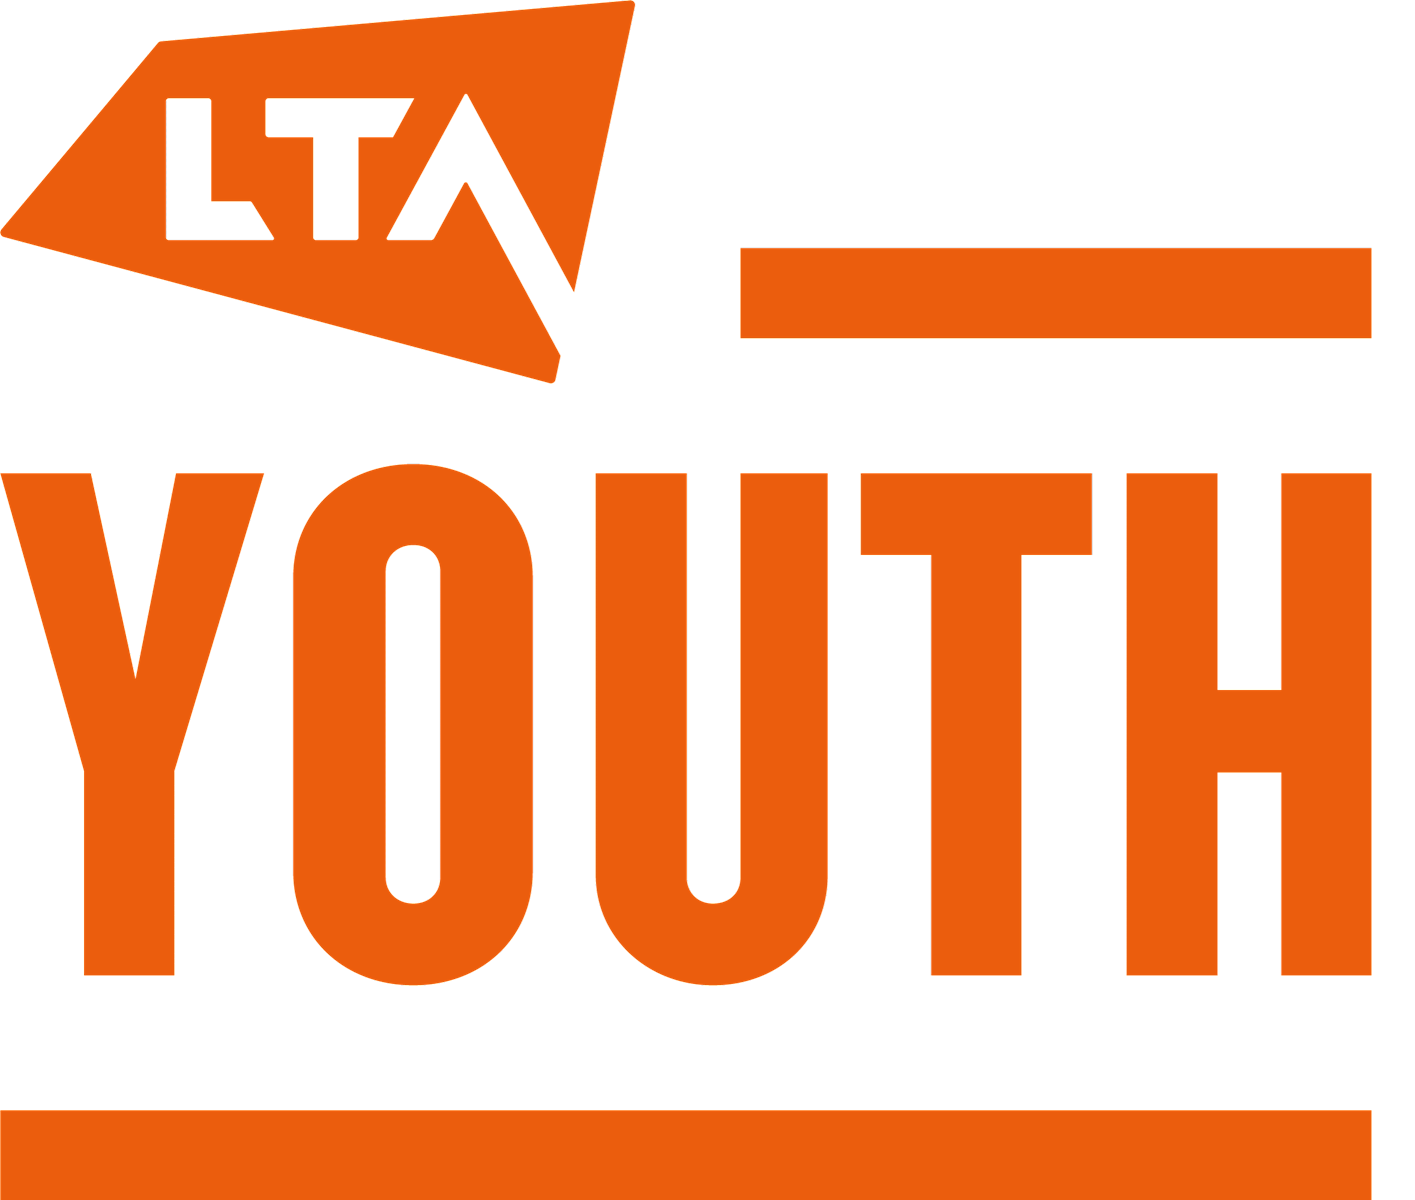 LTA Youth logo primary